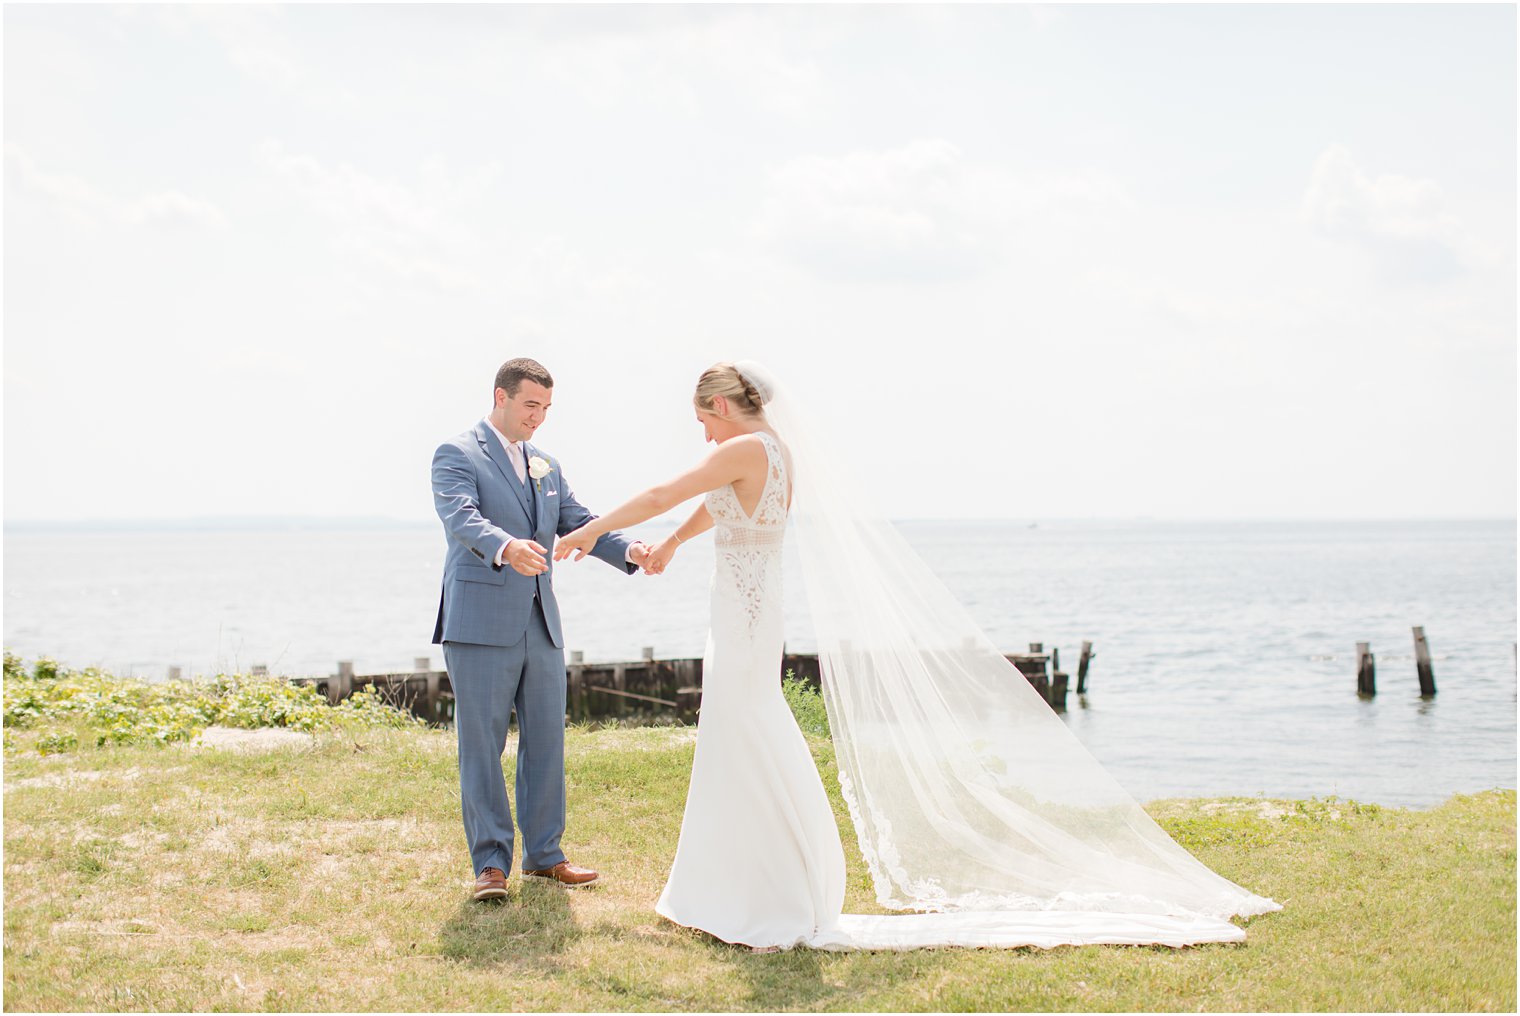 Elegant summer wedding with Idalia Photography in New Jersey